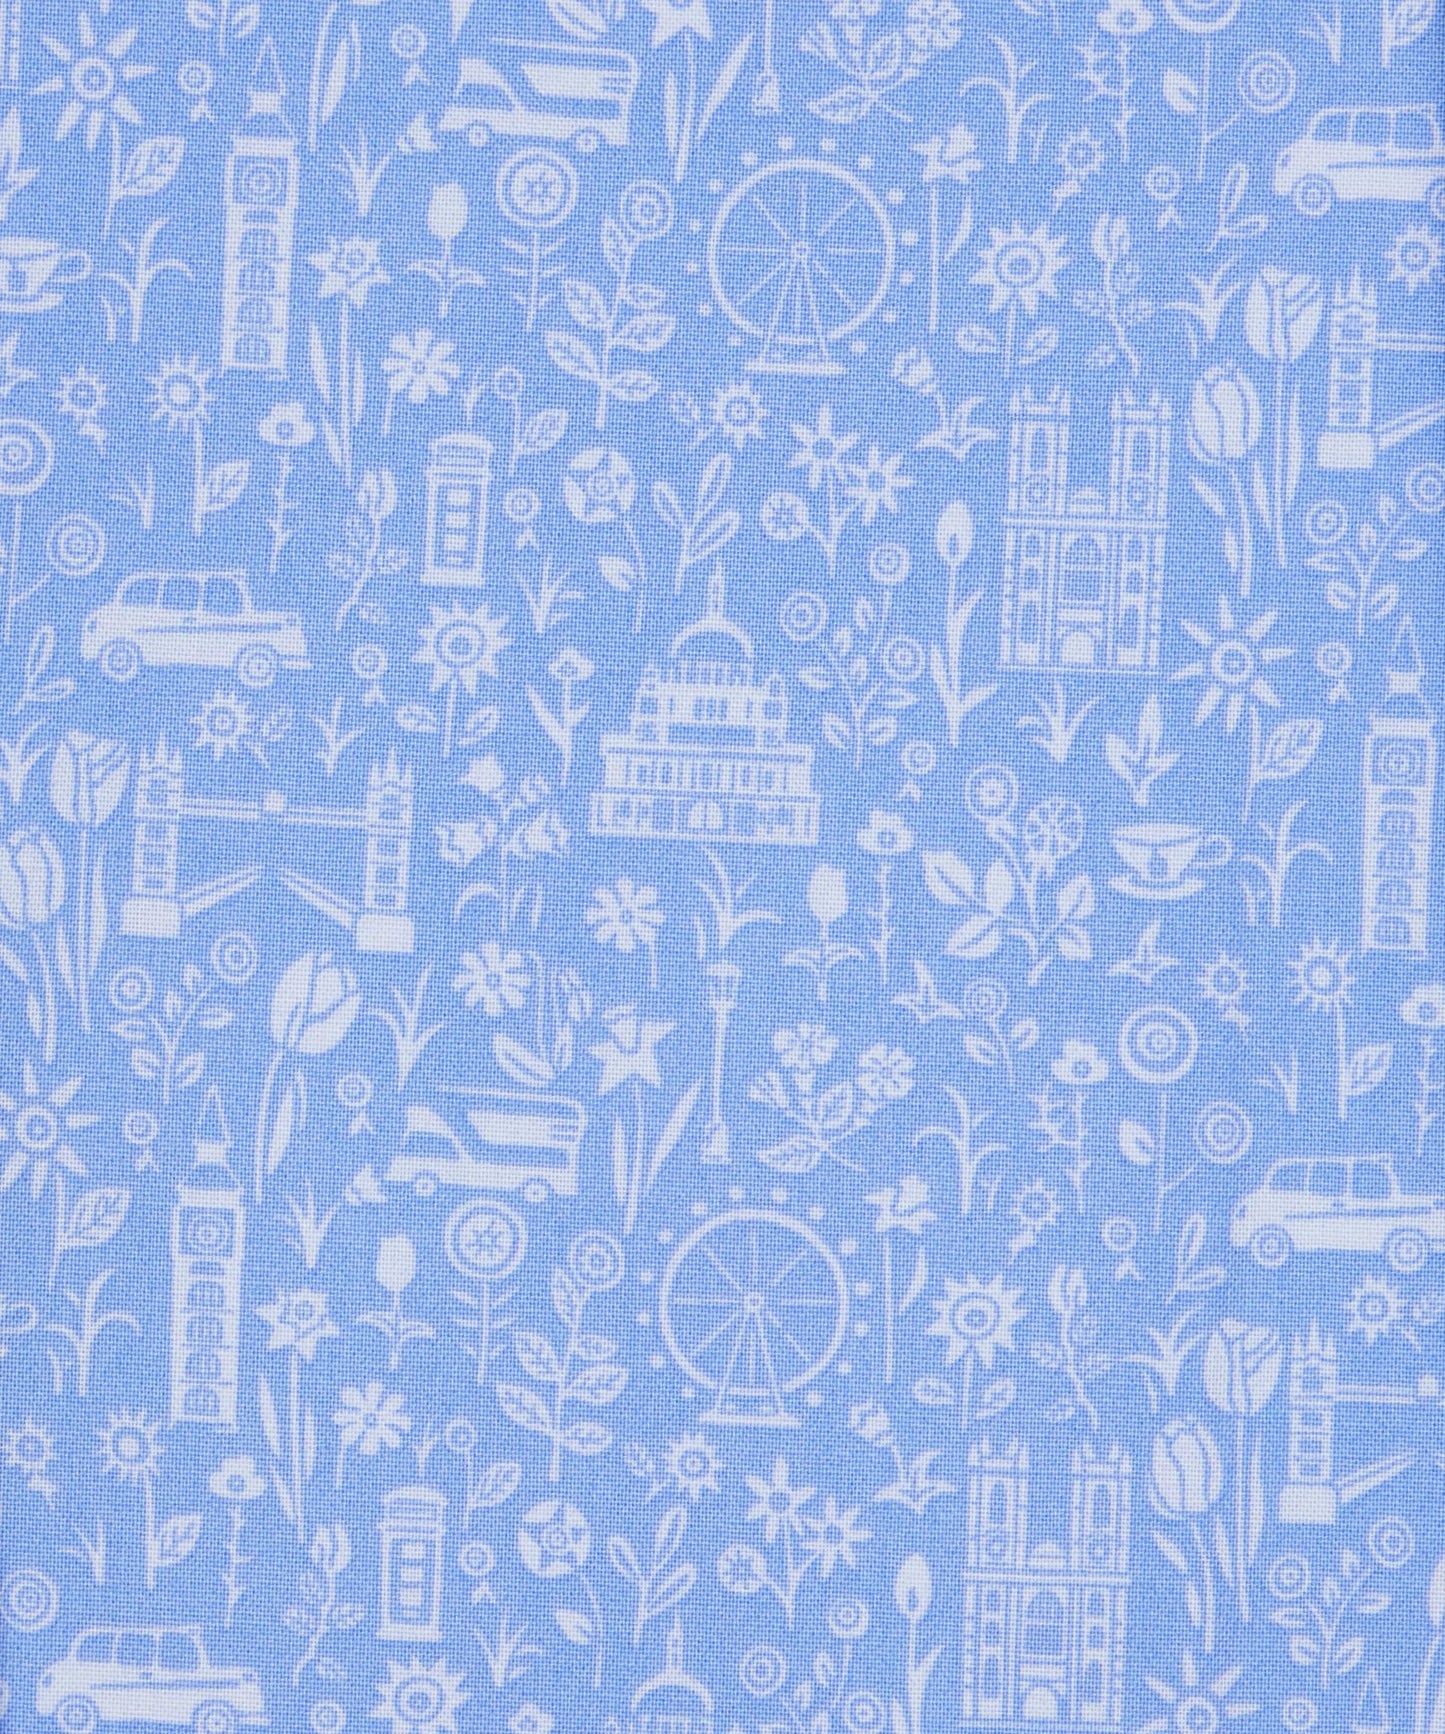 City Sights - London Parks Cotton Print Fabric - per half metre